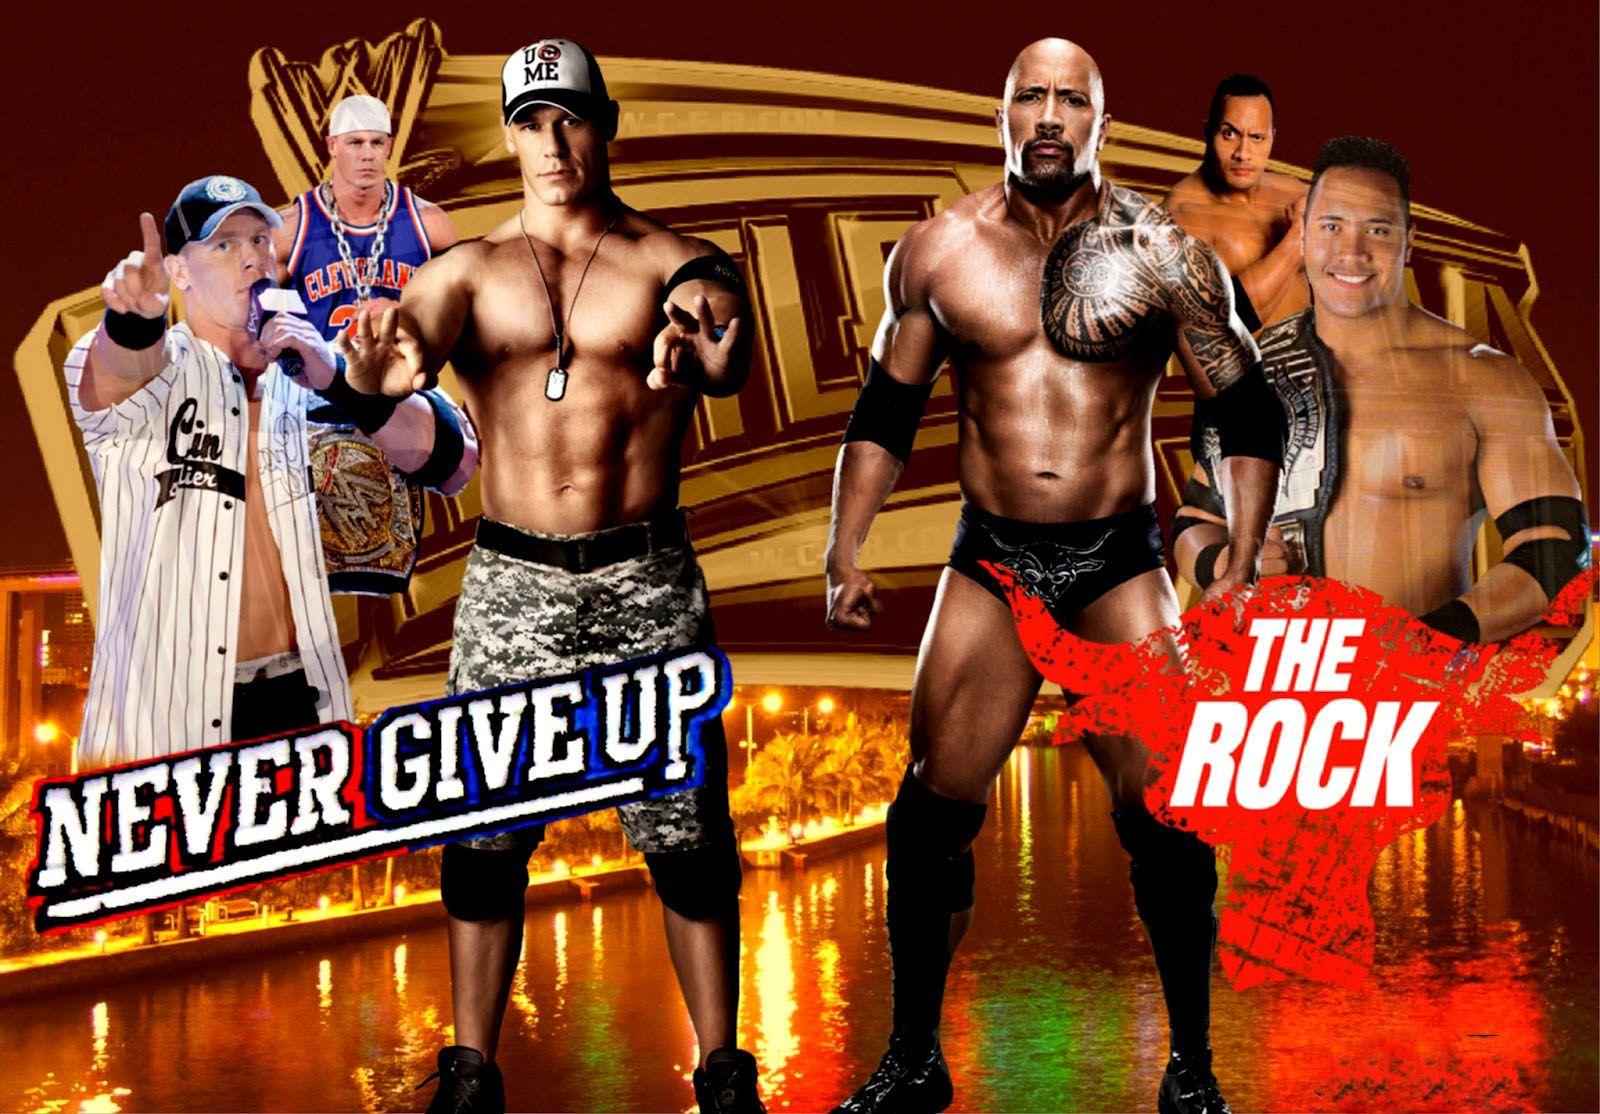 John Cena and The Rock Wallpaper Superstars, WWE Wallpaper